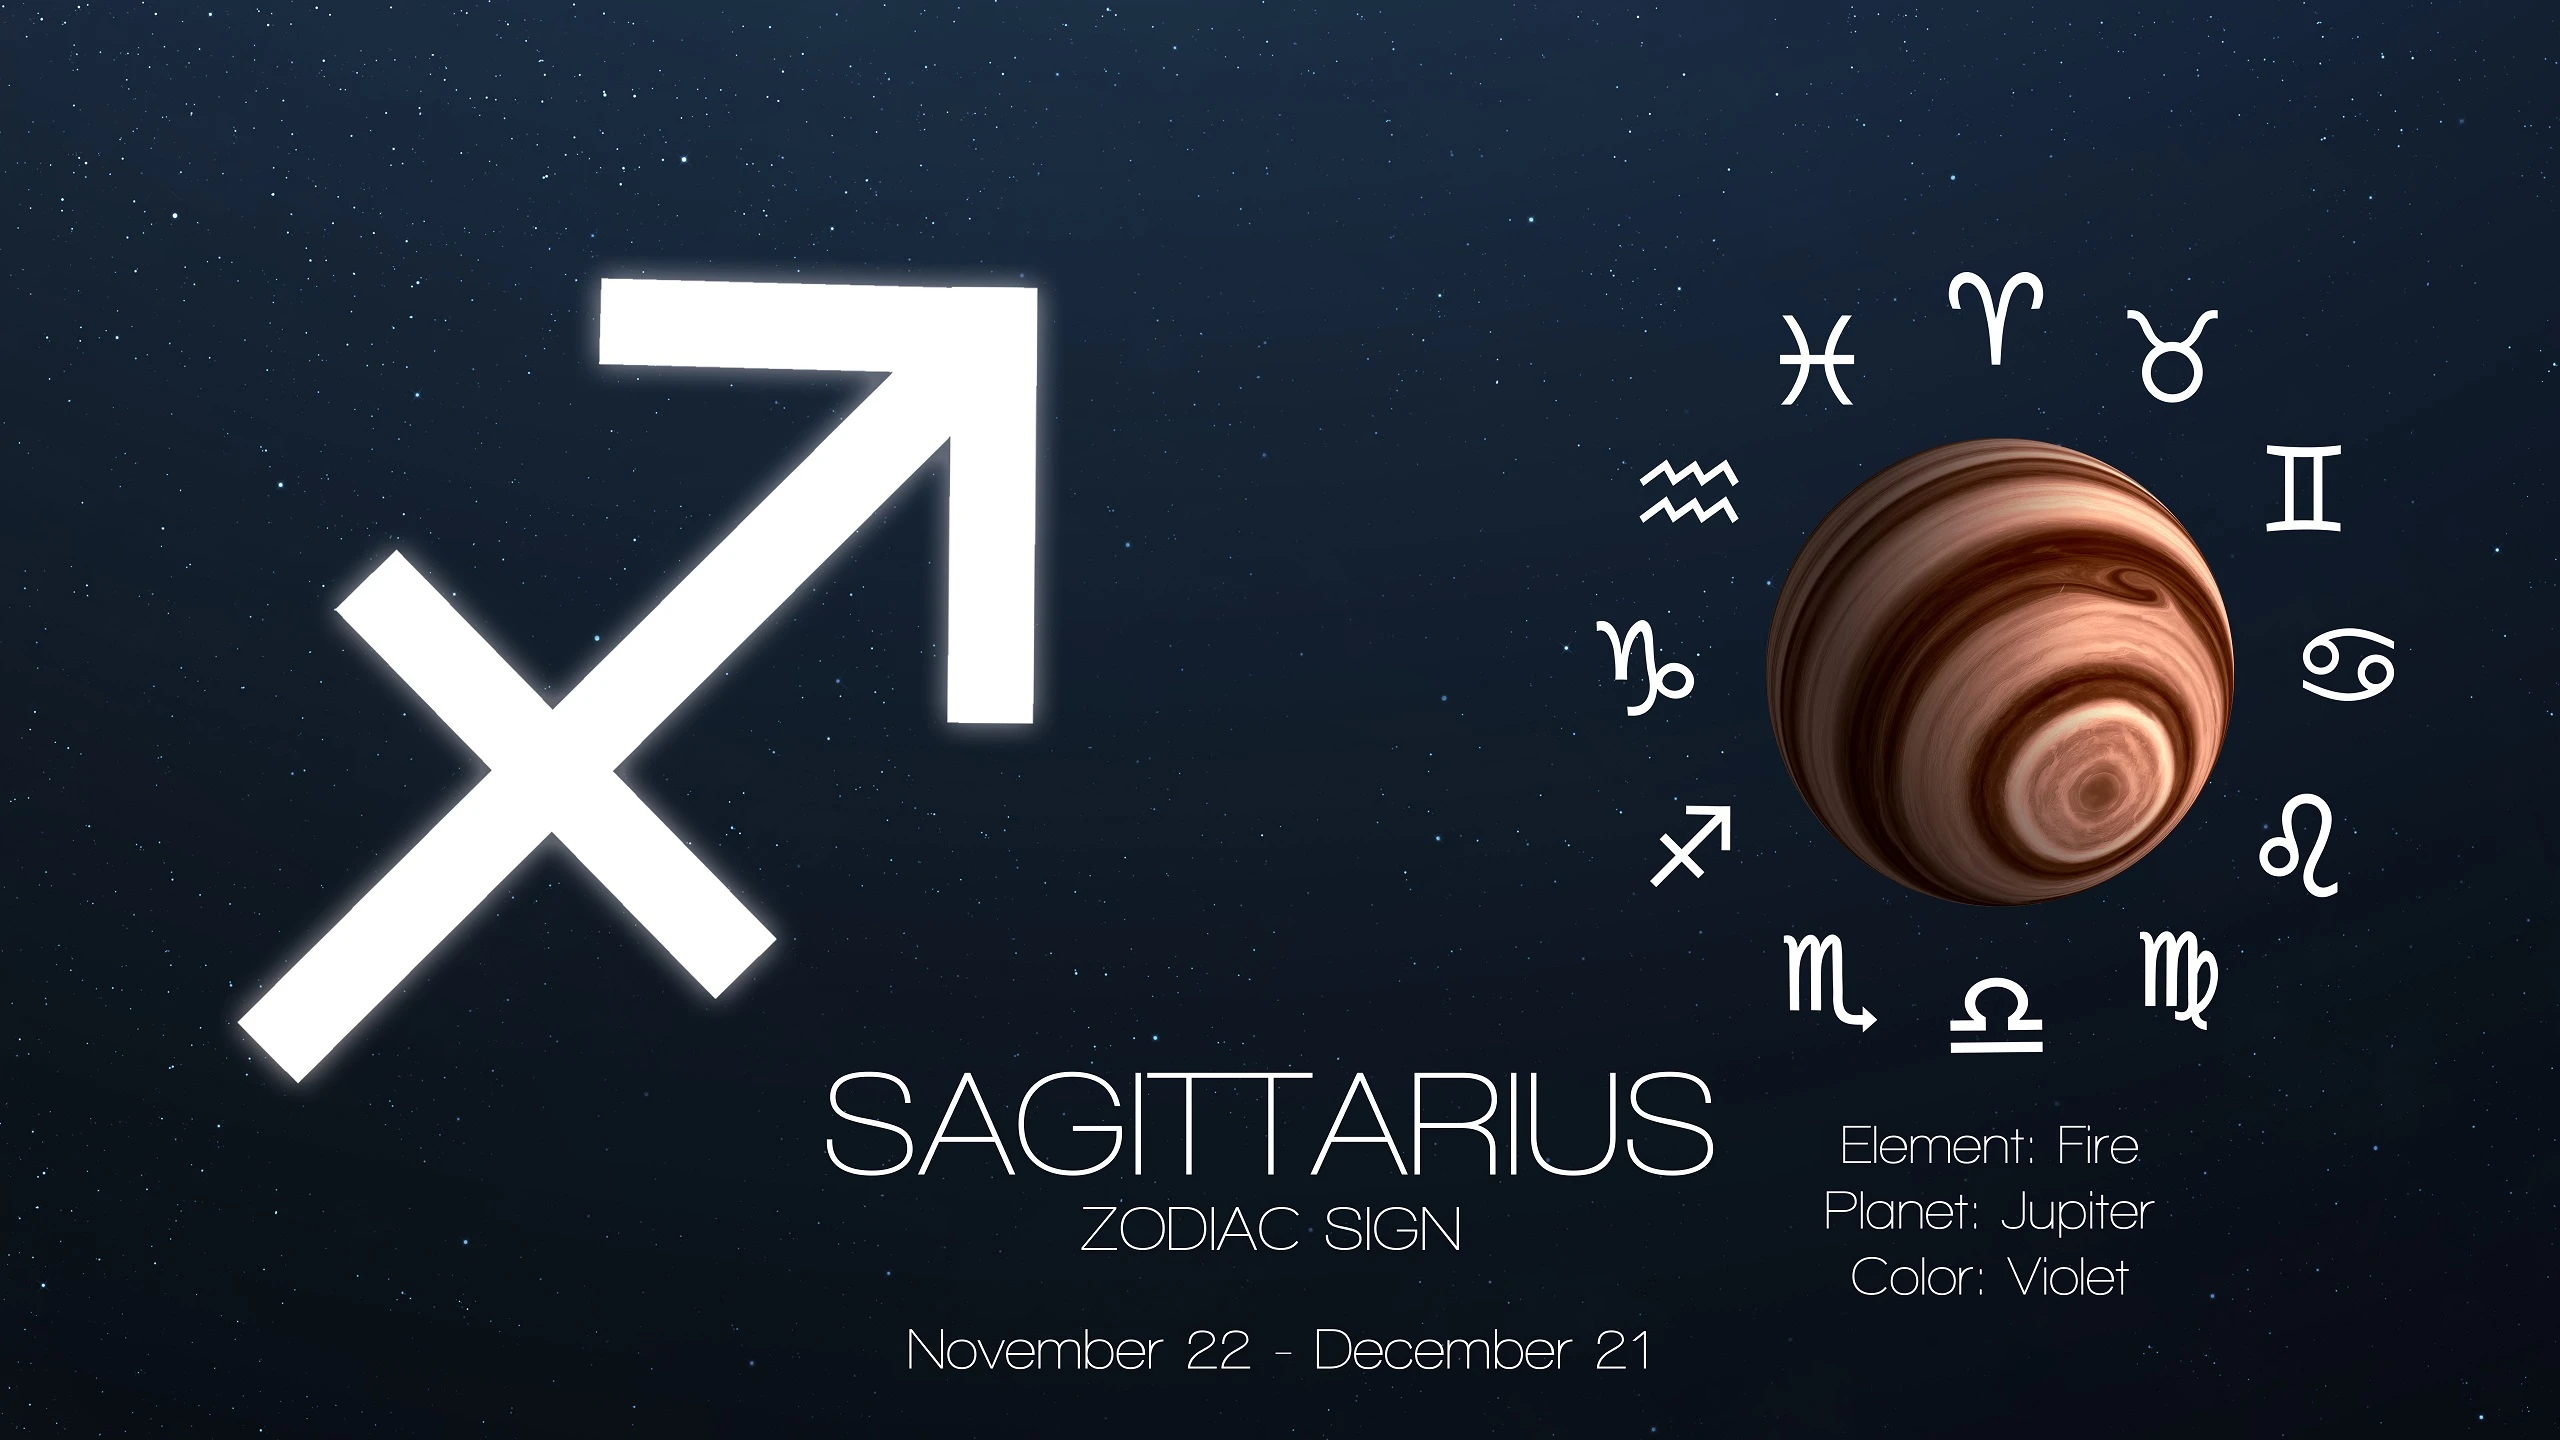 Sagittarius zodiac sign facts and stats